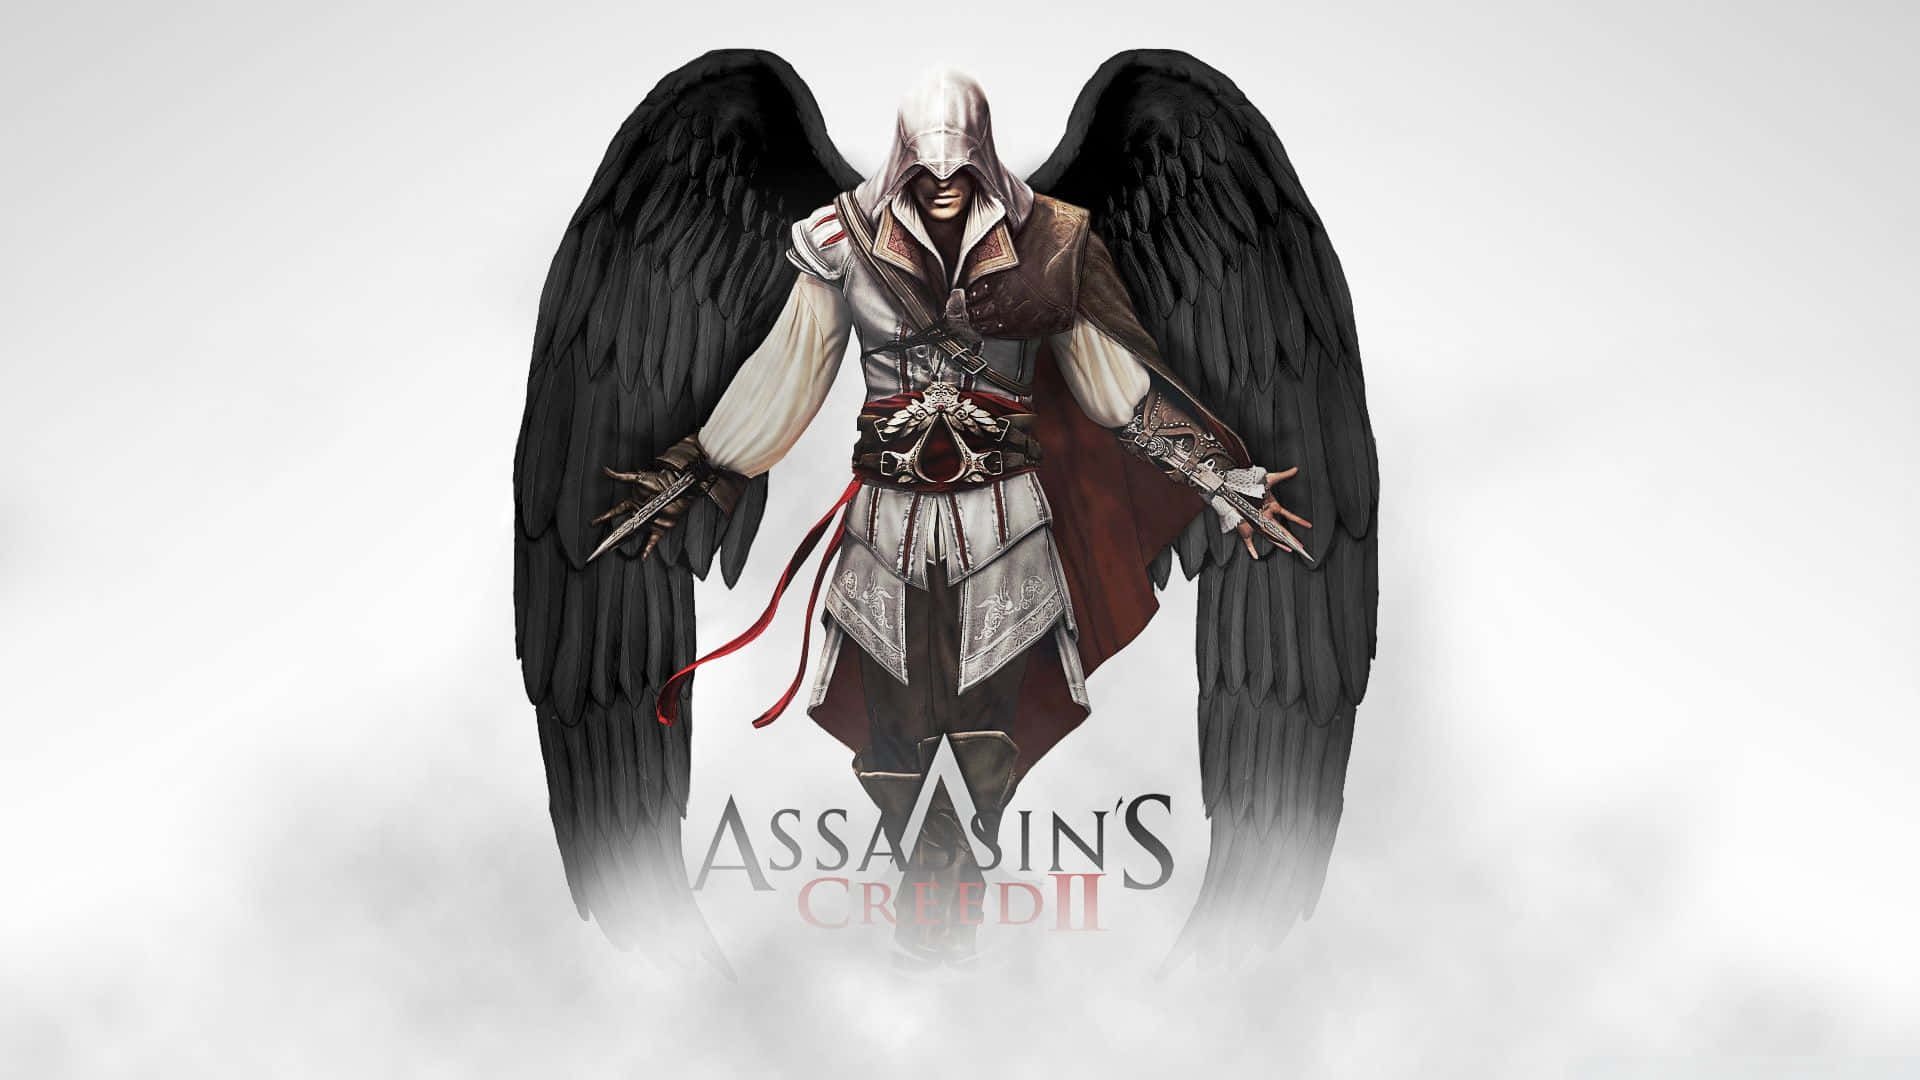 Assassin's Creed Ezio in Action Wallpaper